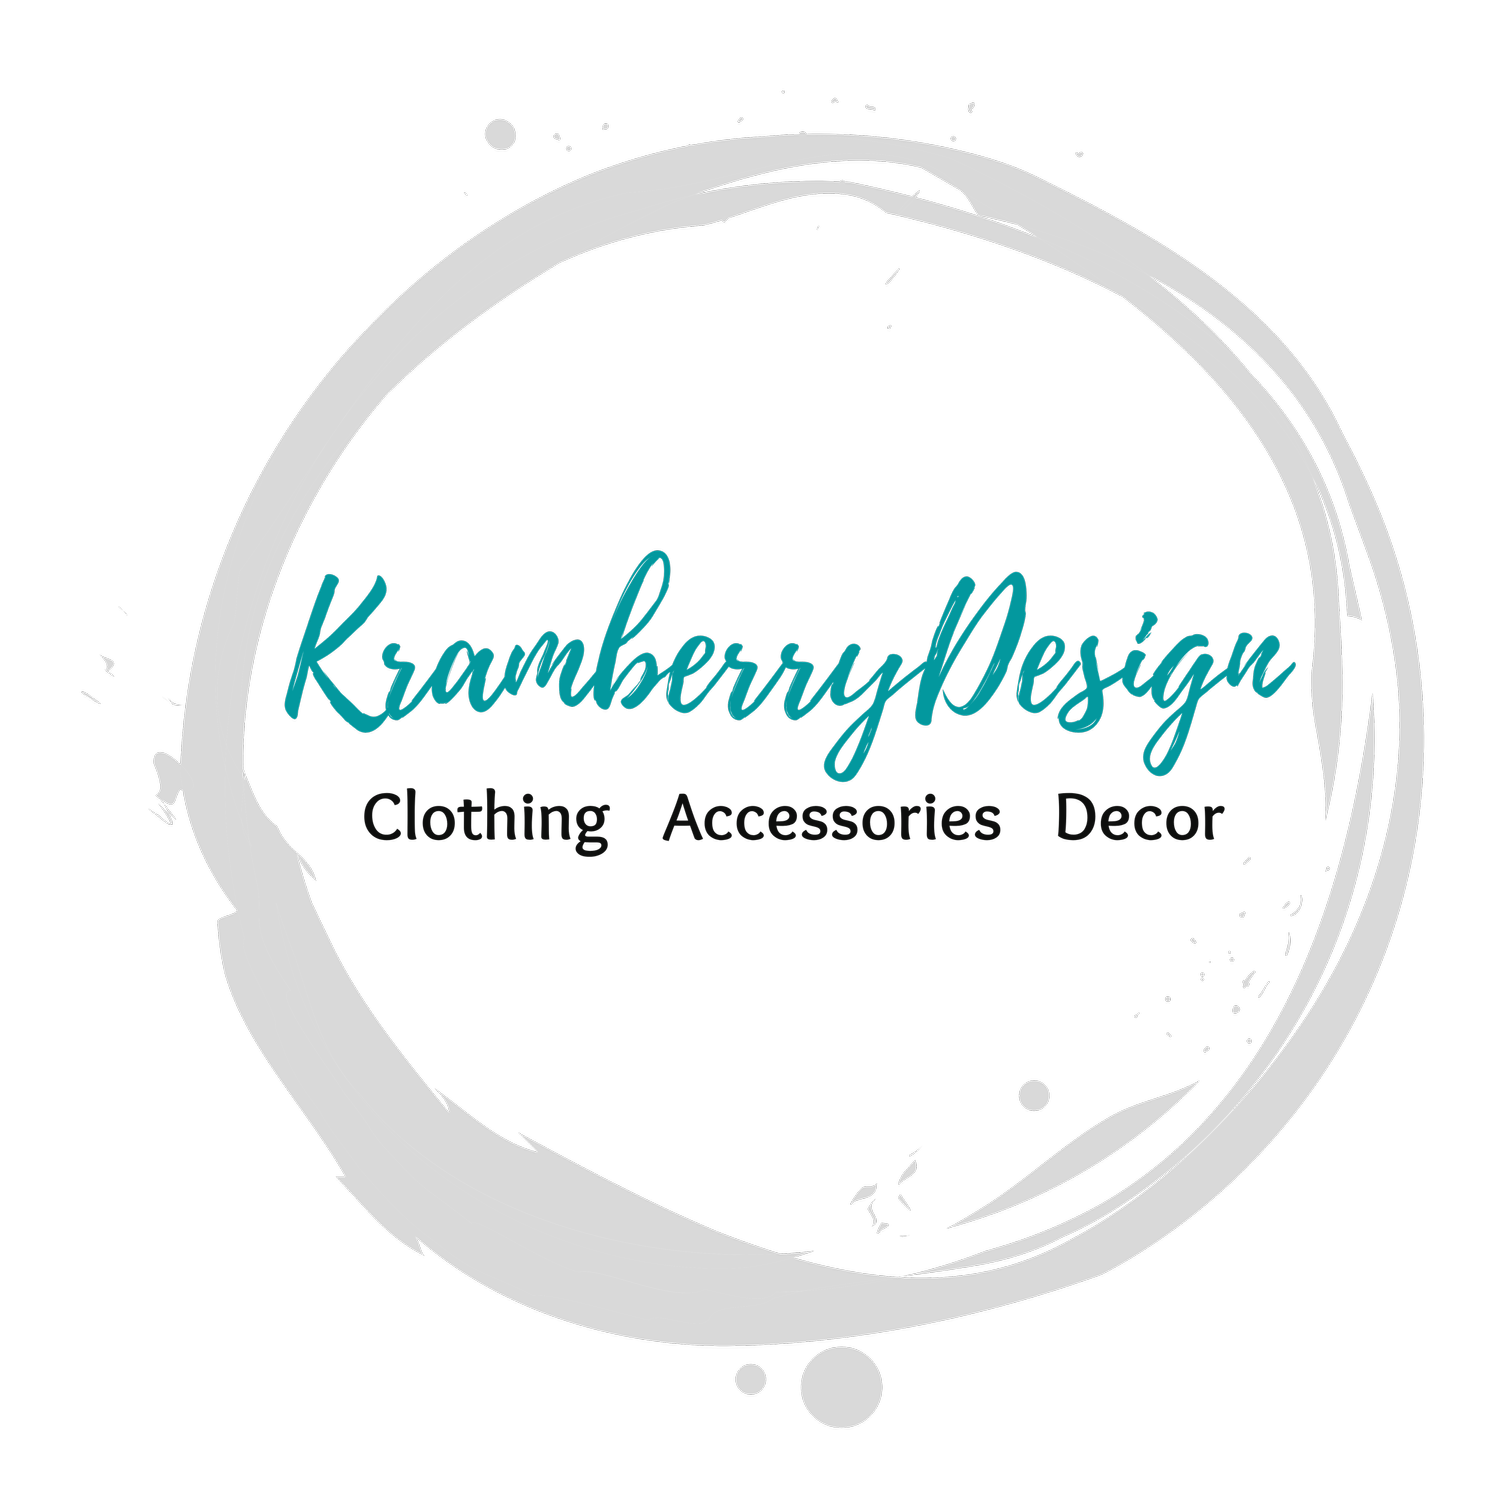 Kramberry Design